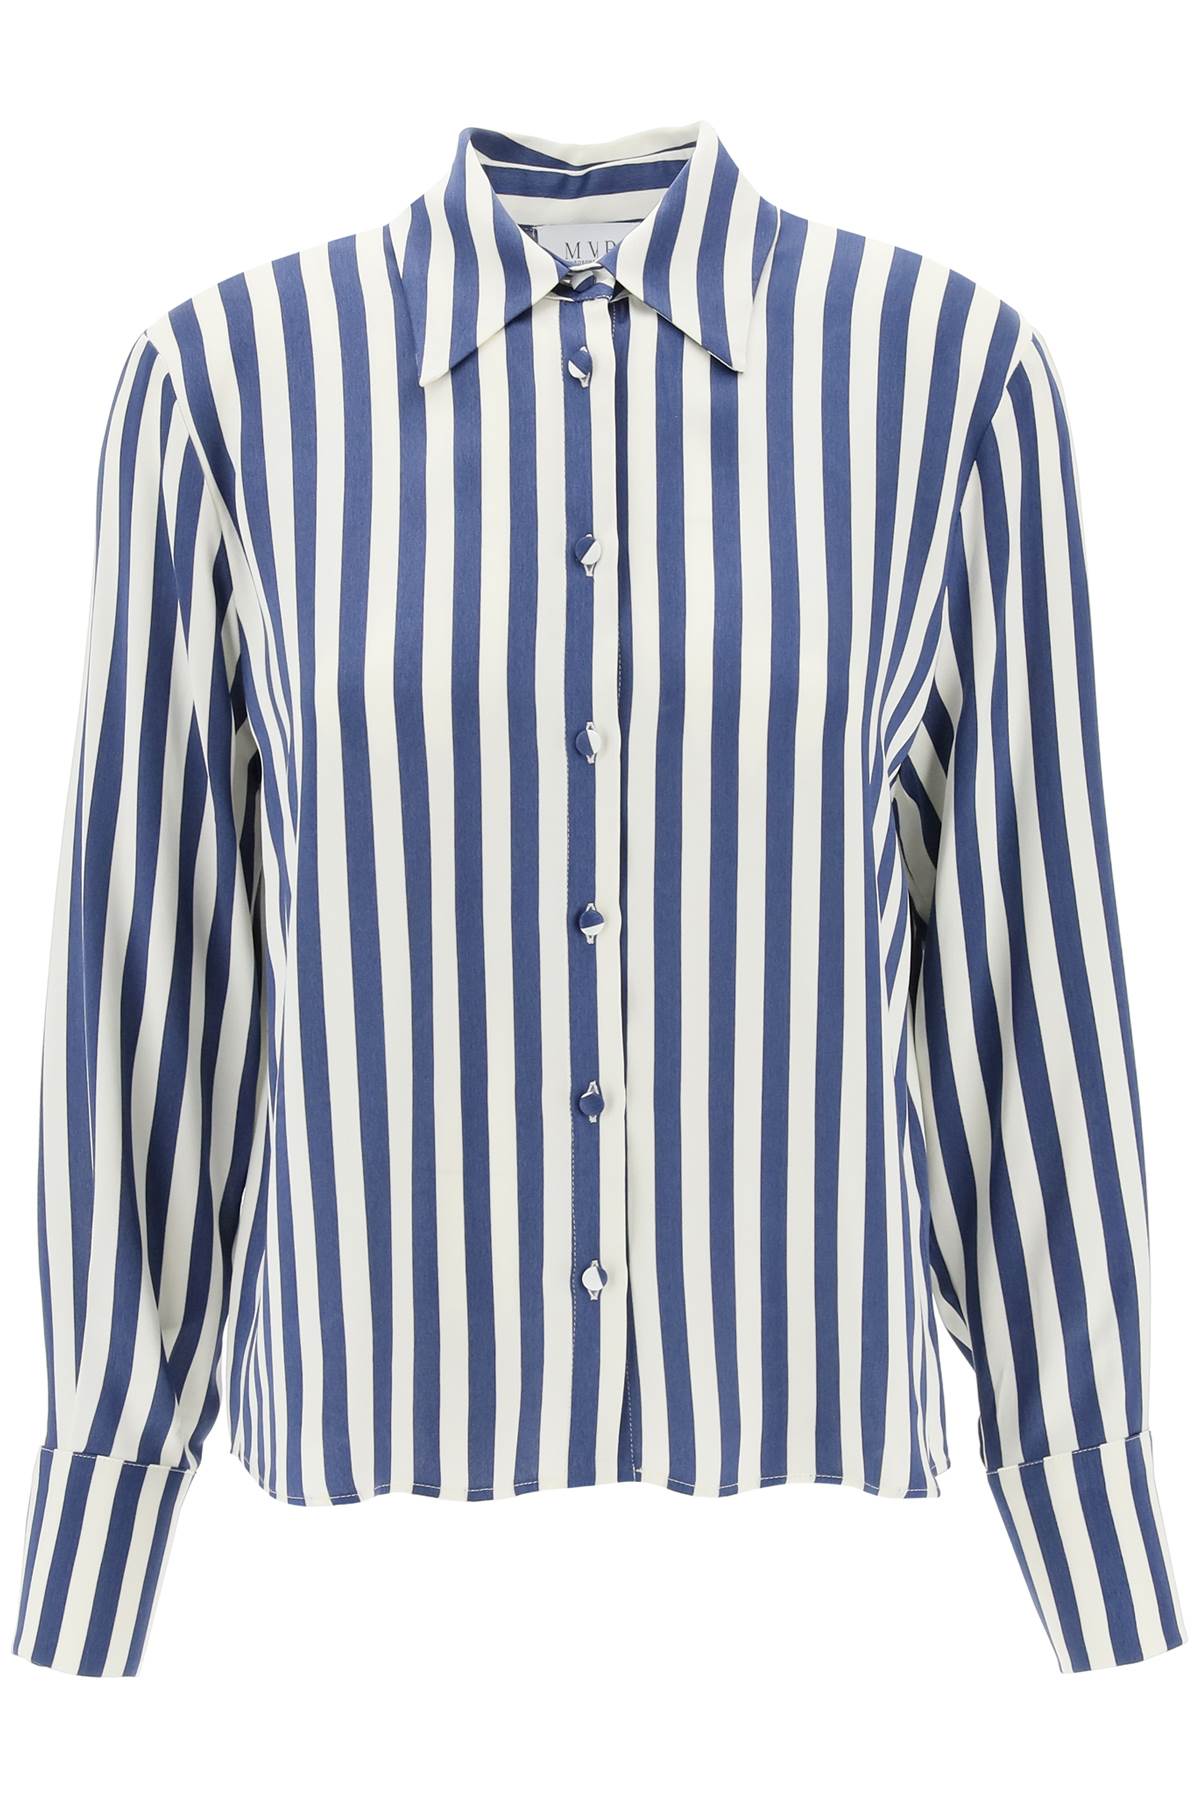 Mvp wardrobe "striped charmeuse shirt by le-0